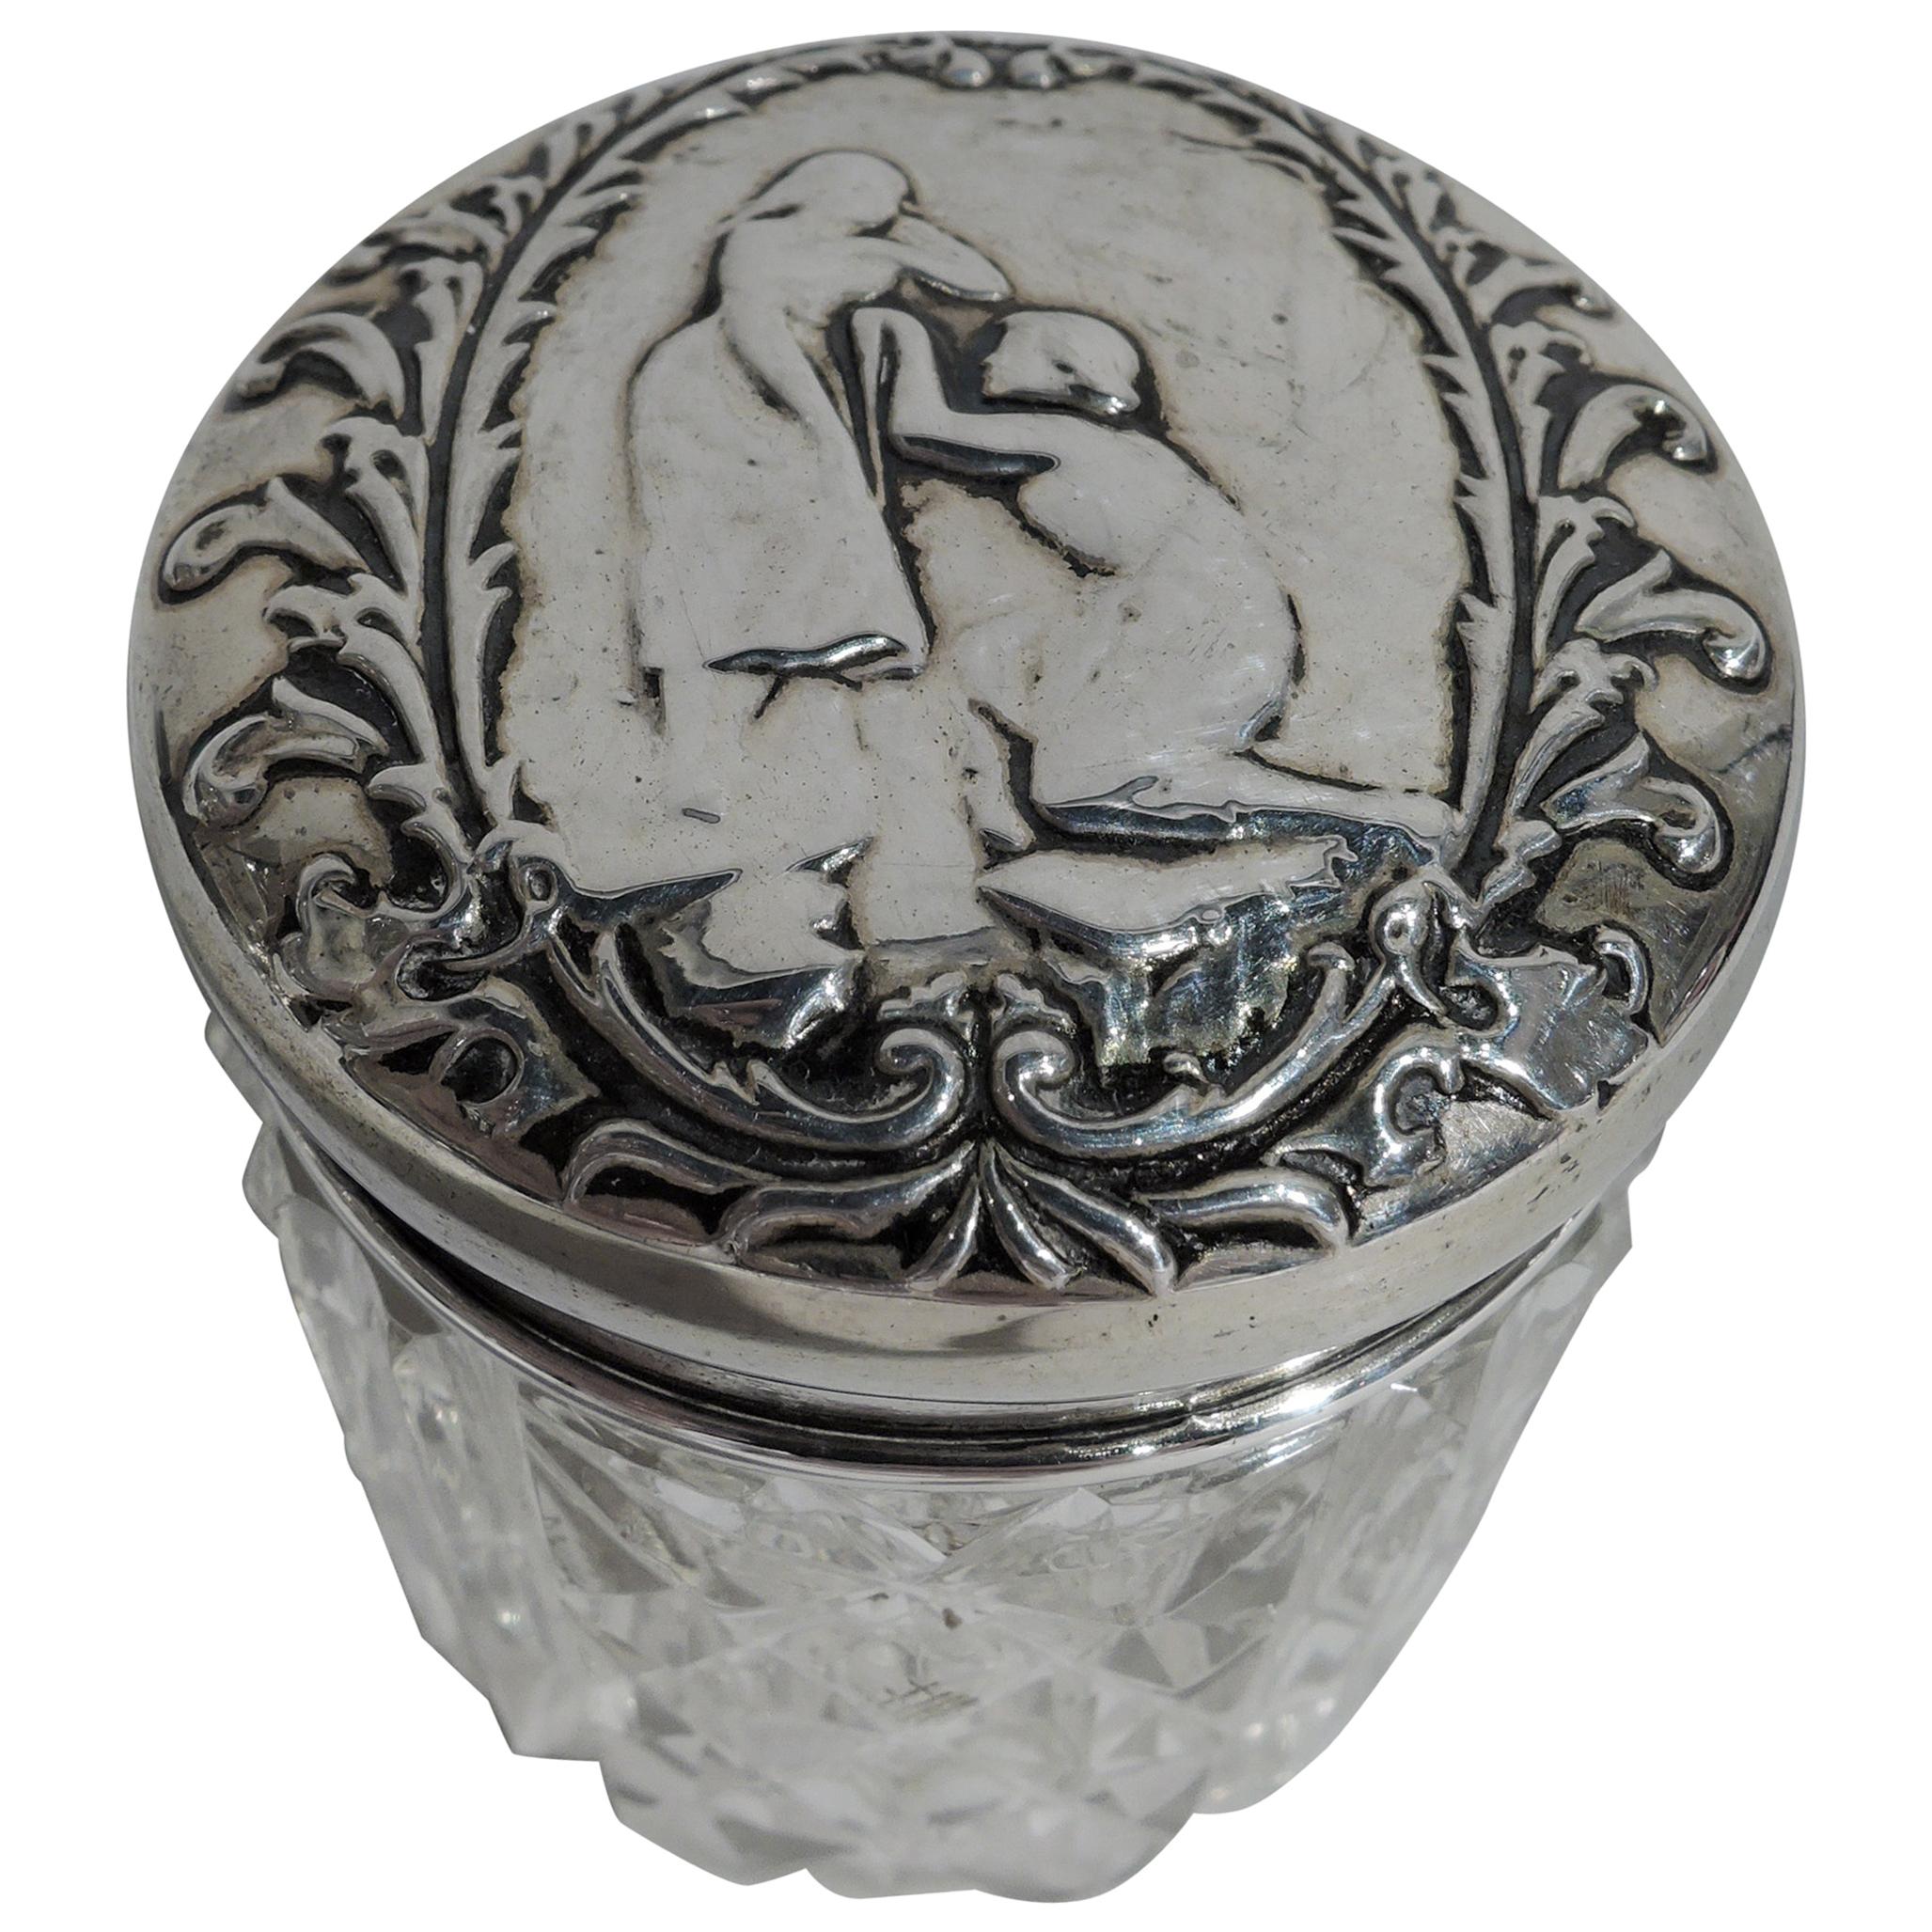 Antique English Edwardian Sterling Silver and Cut-Glass Powder Jar